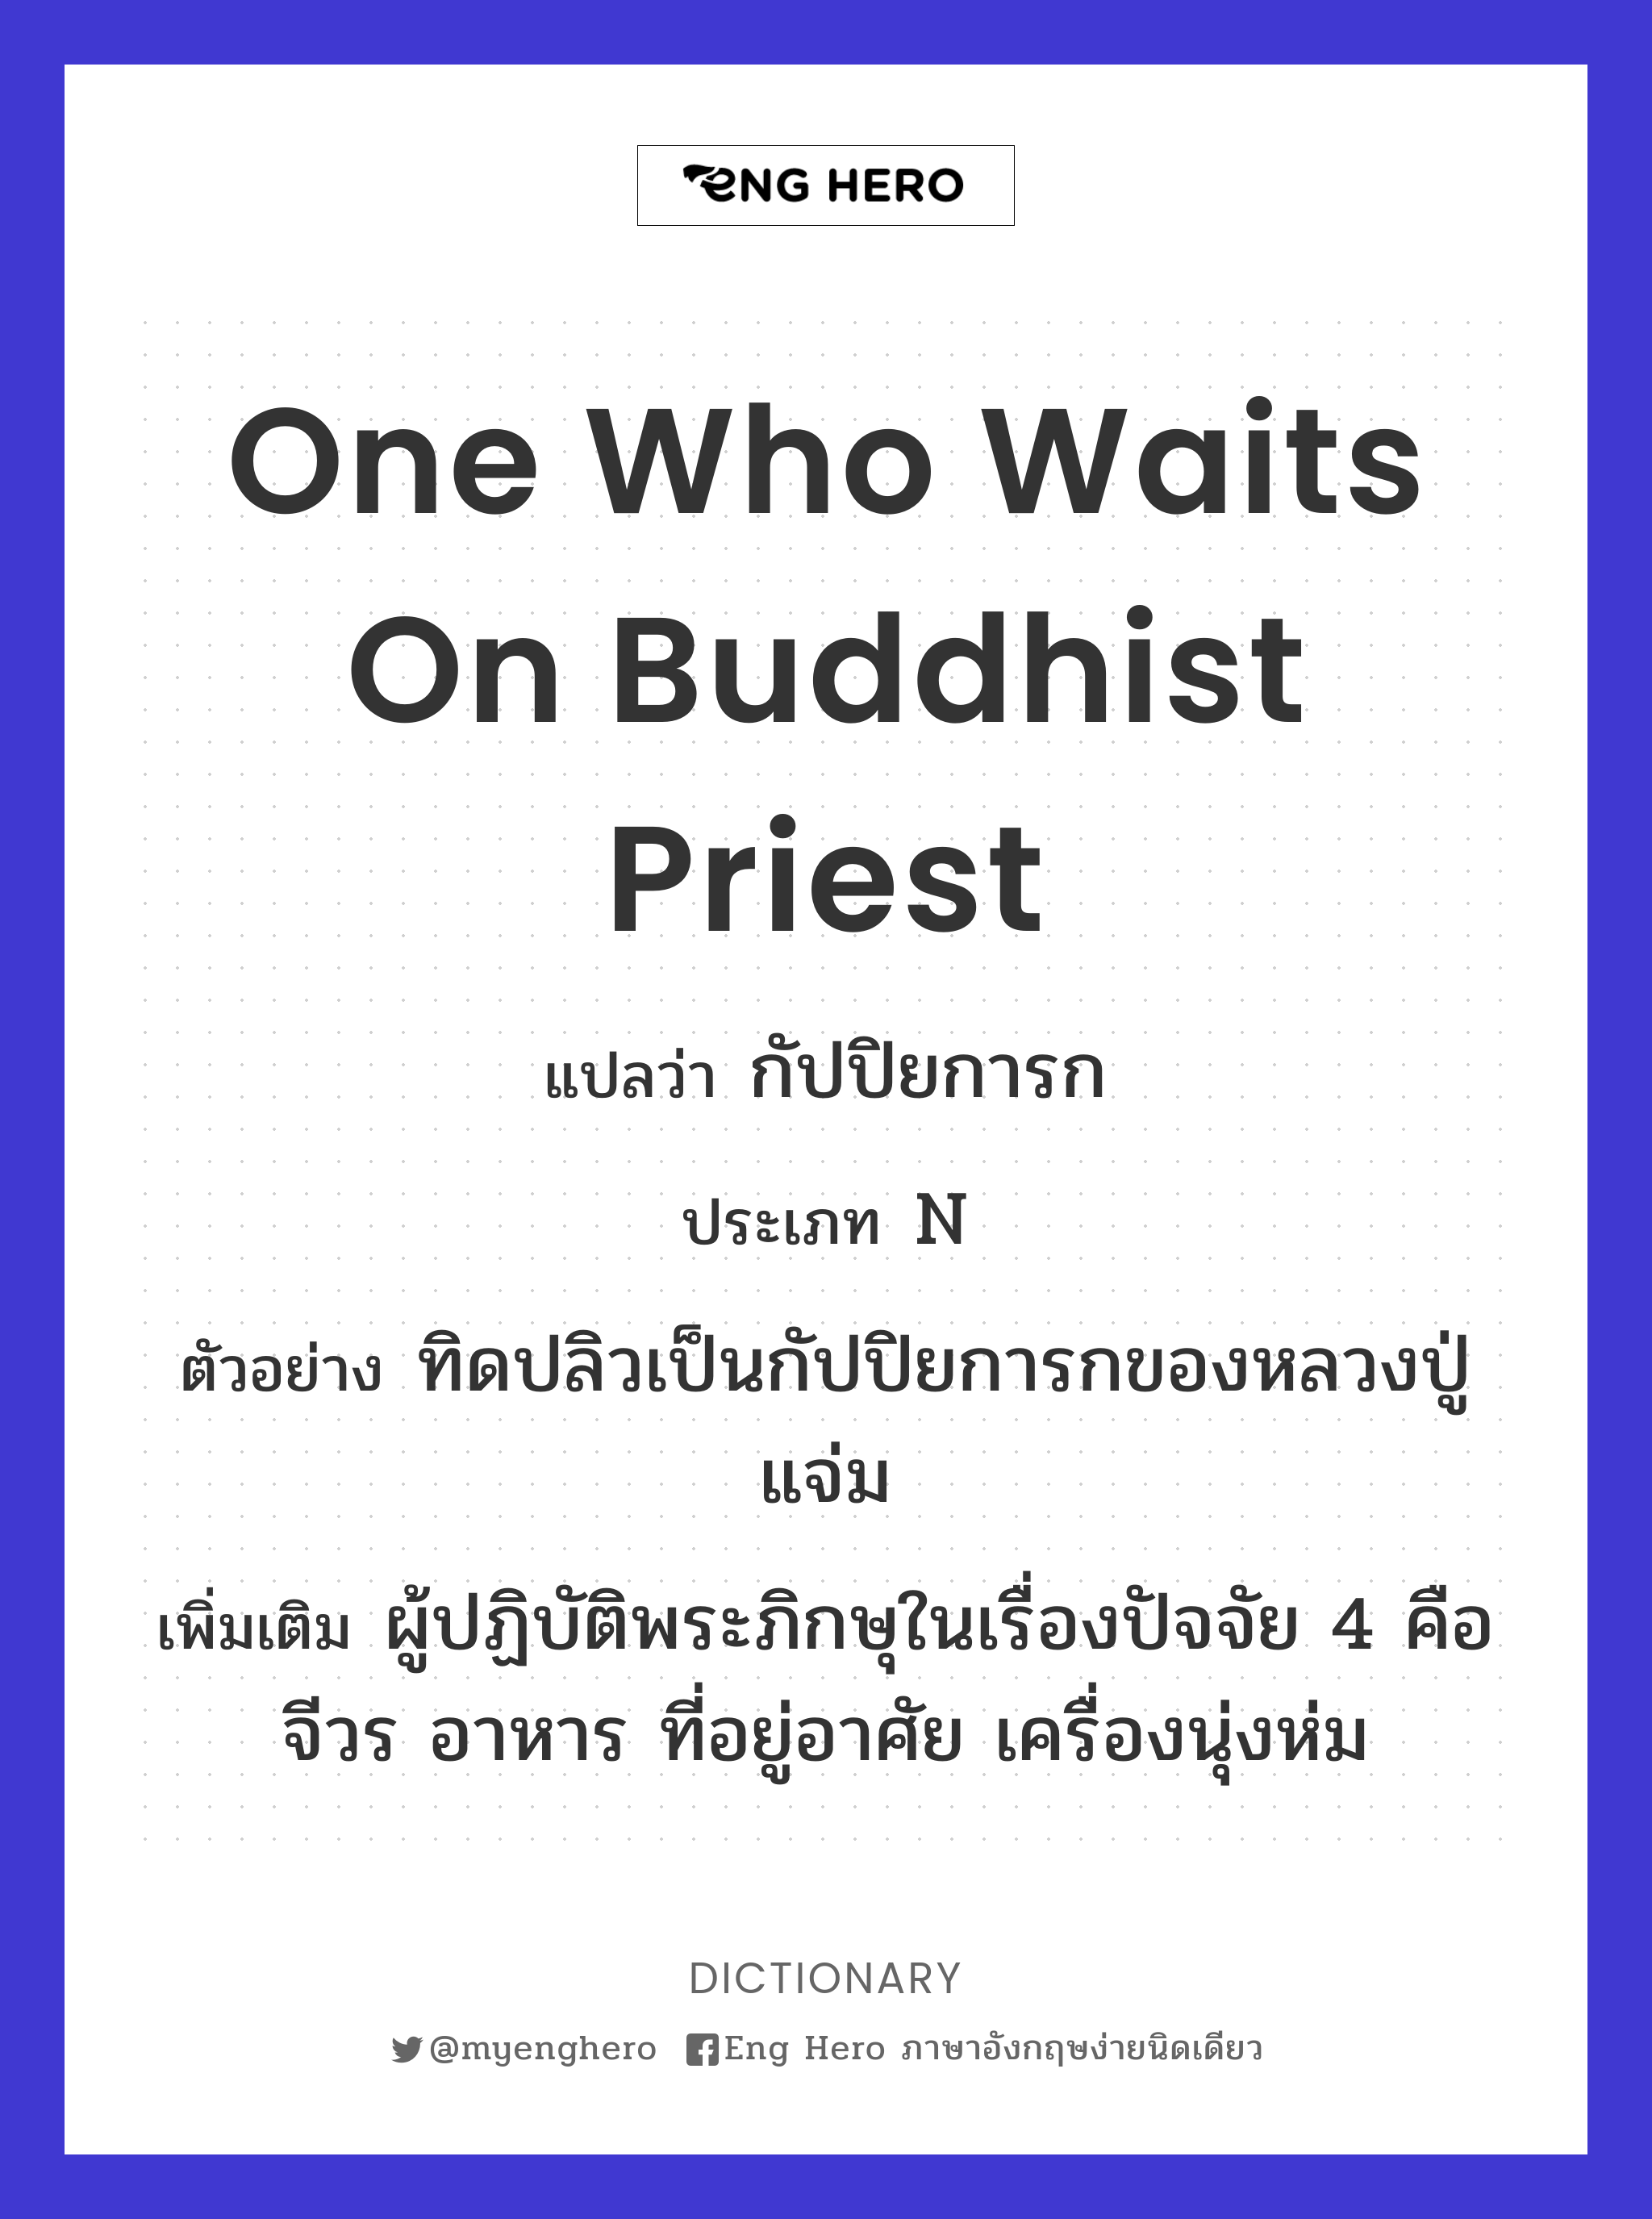 one who waits on Buddhist priest